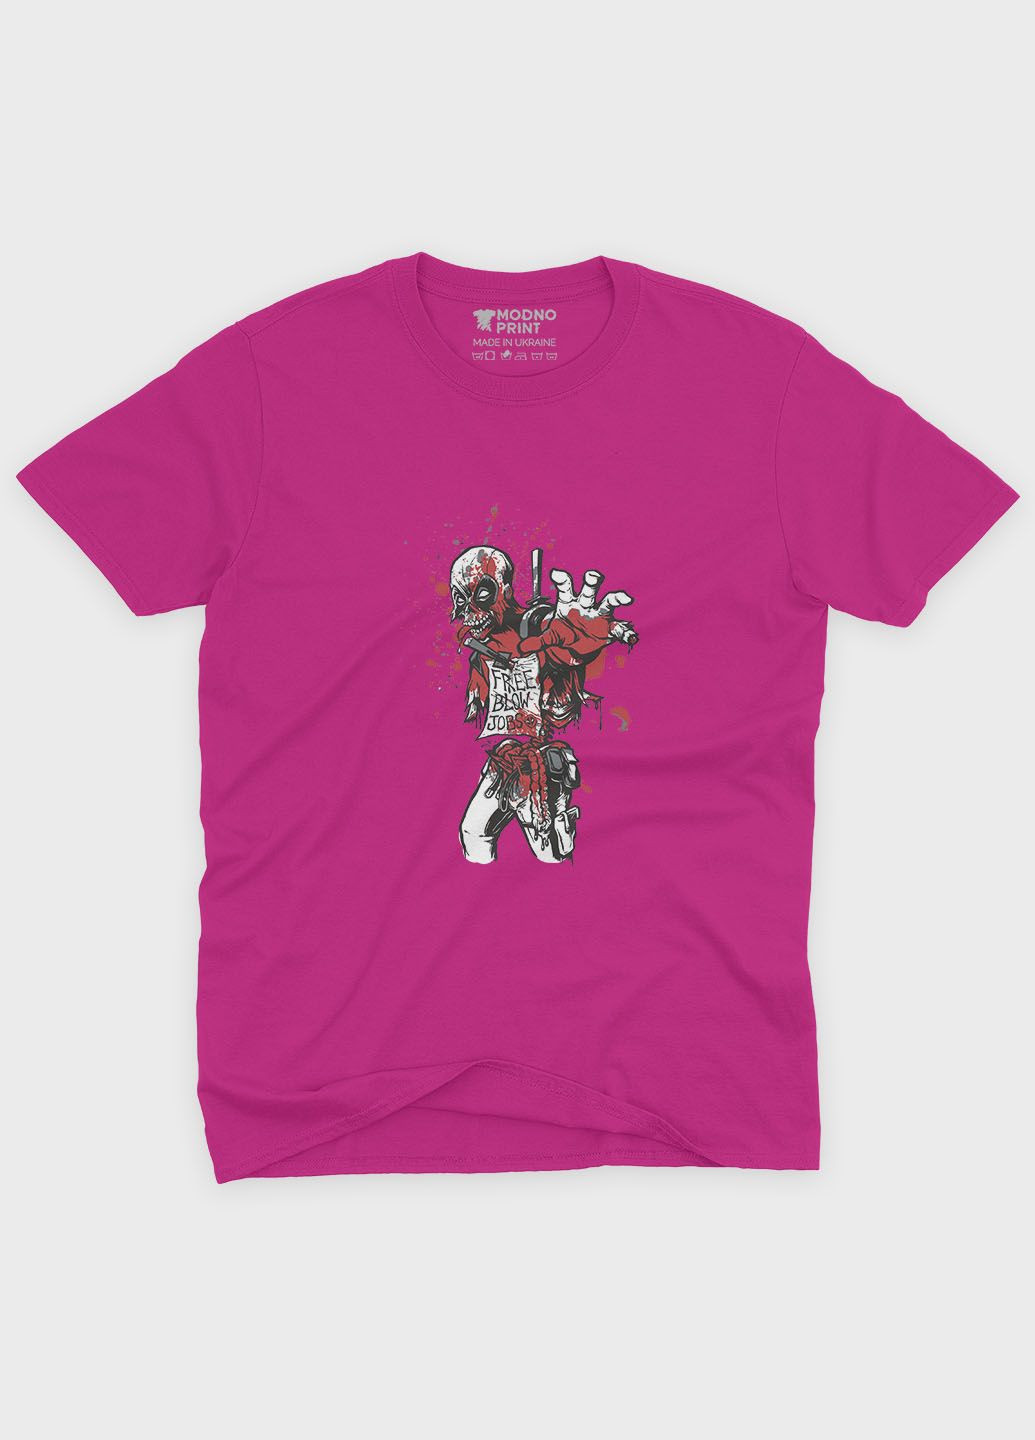 Розовая демисезонная футболка для мальчика с принтом антигероя - дедпул (ts001-1-fuxj-006-015-034-b) Modno